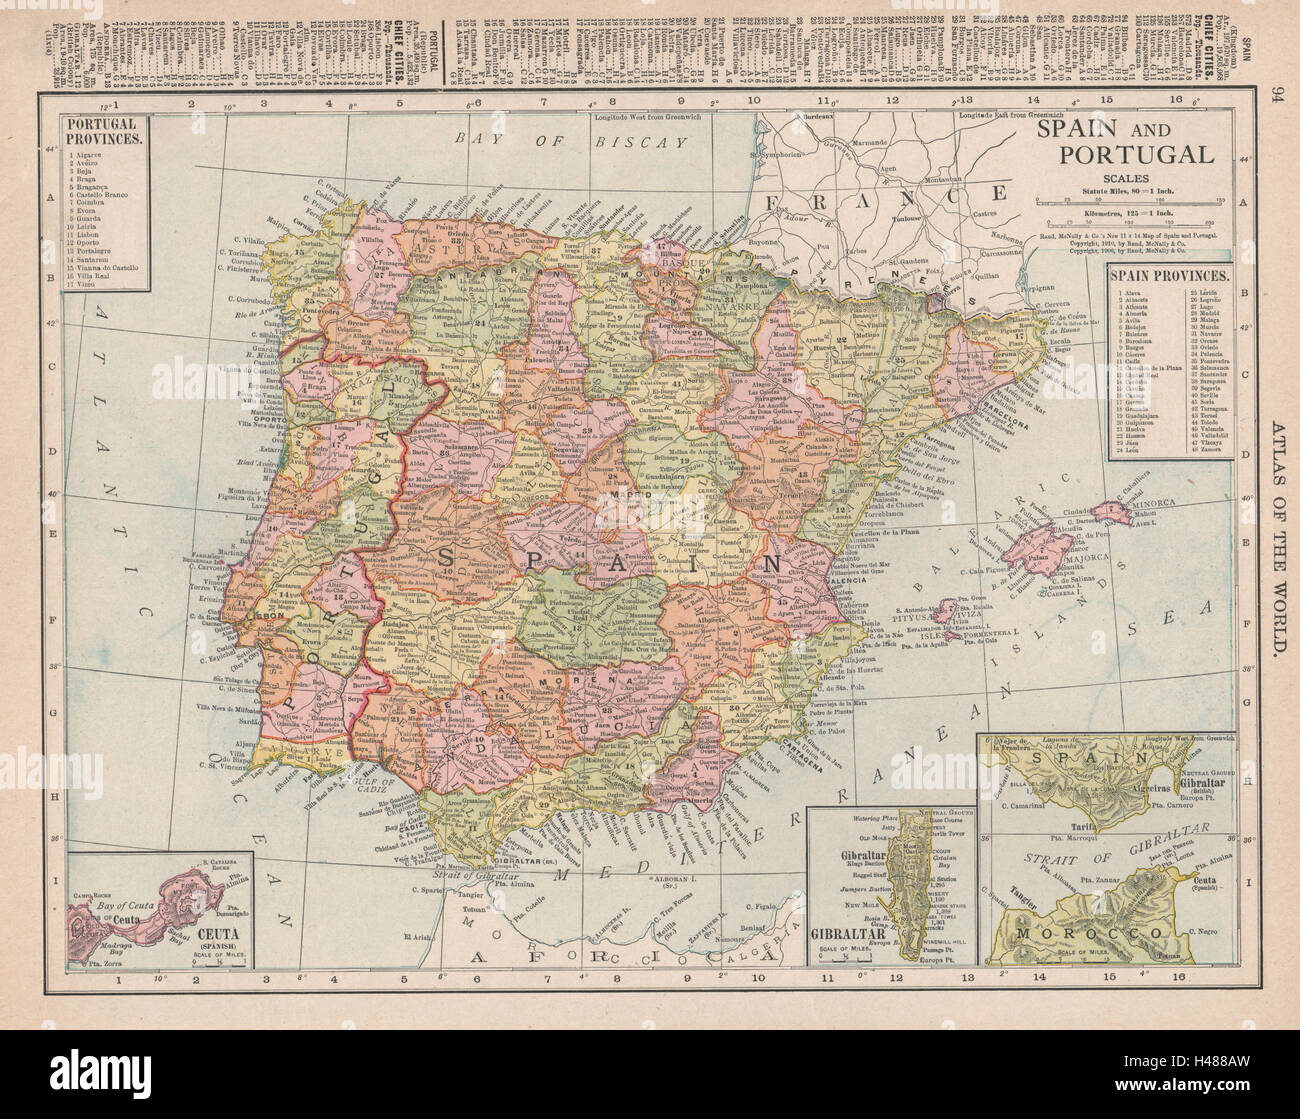 Spain & Portugal. Ceuta. Strait of Gibraltar. Iberia. RAND MCNALLY 1912 map Stock Photo